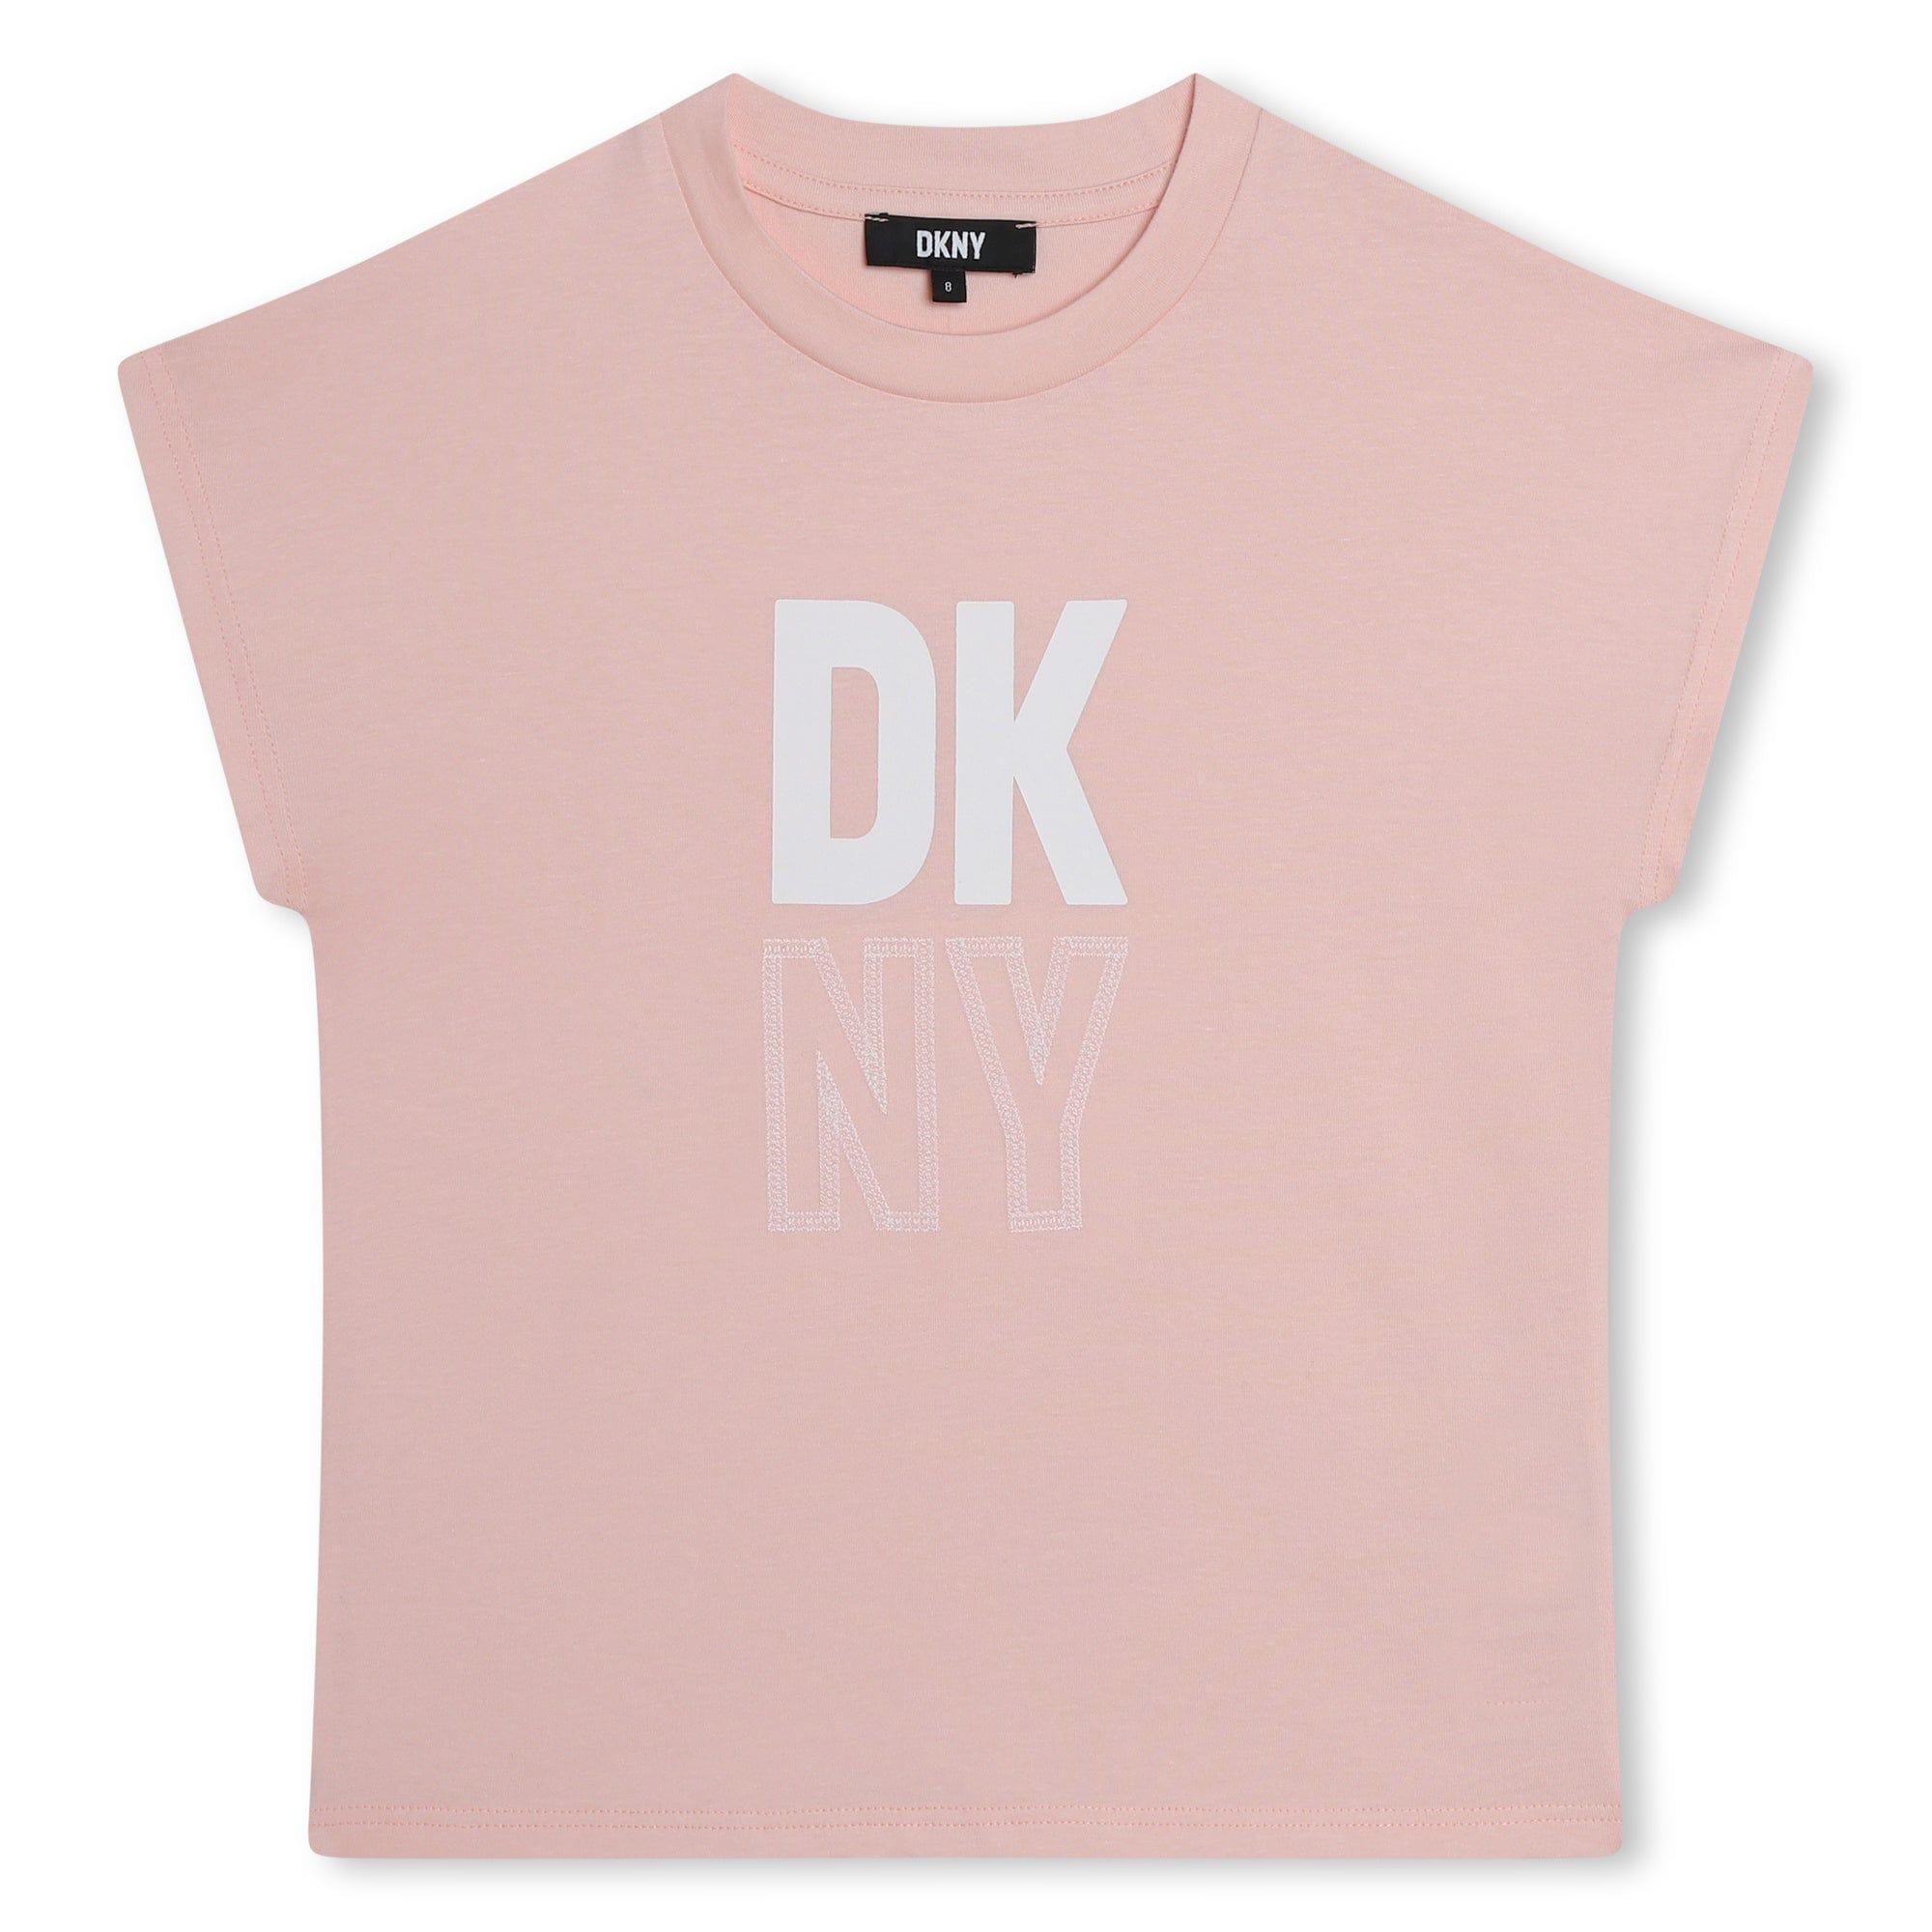 DKNY Logo Tee - Pink - 4